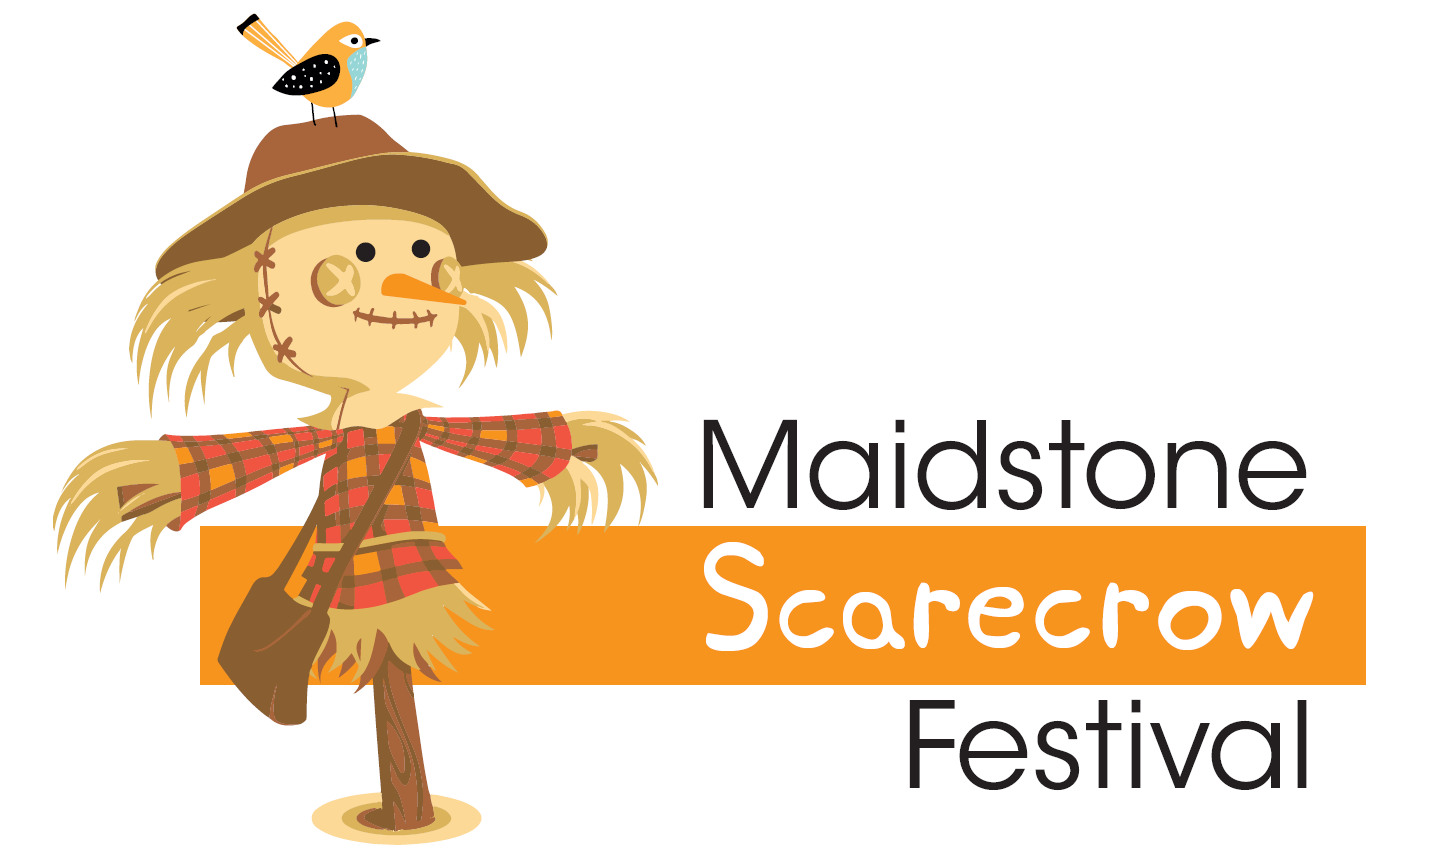 Maidstone Scarecrow Festival